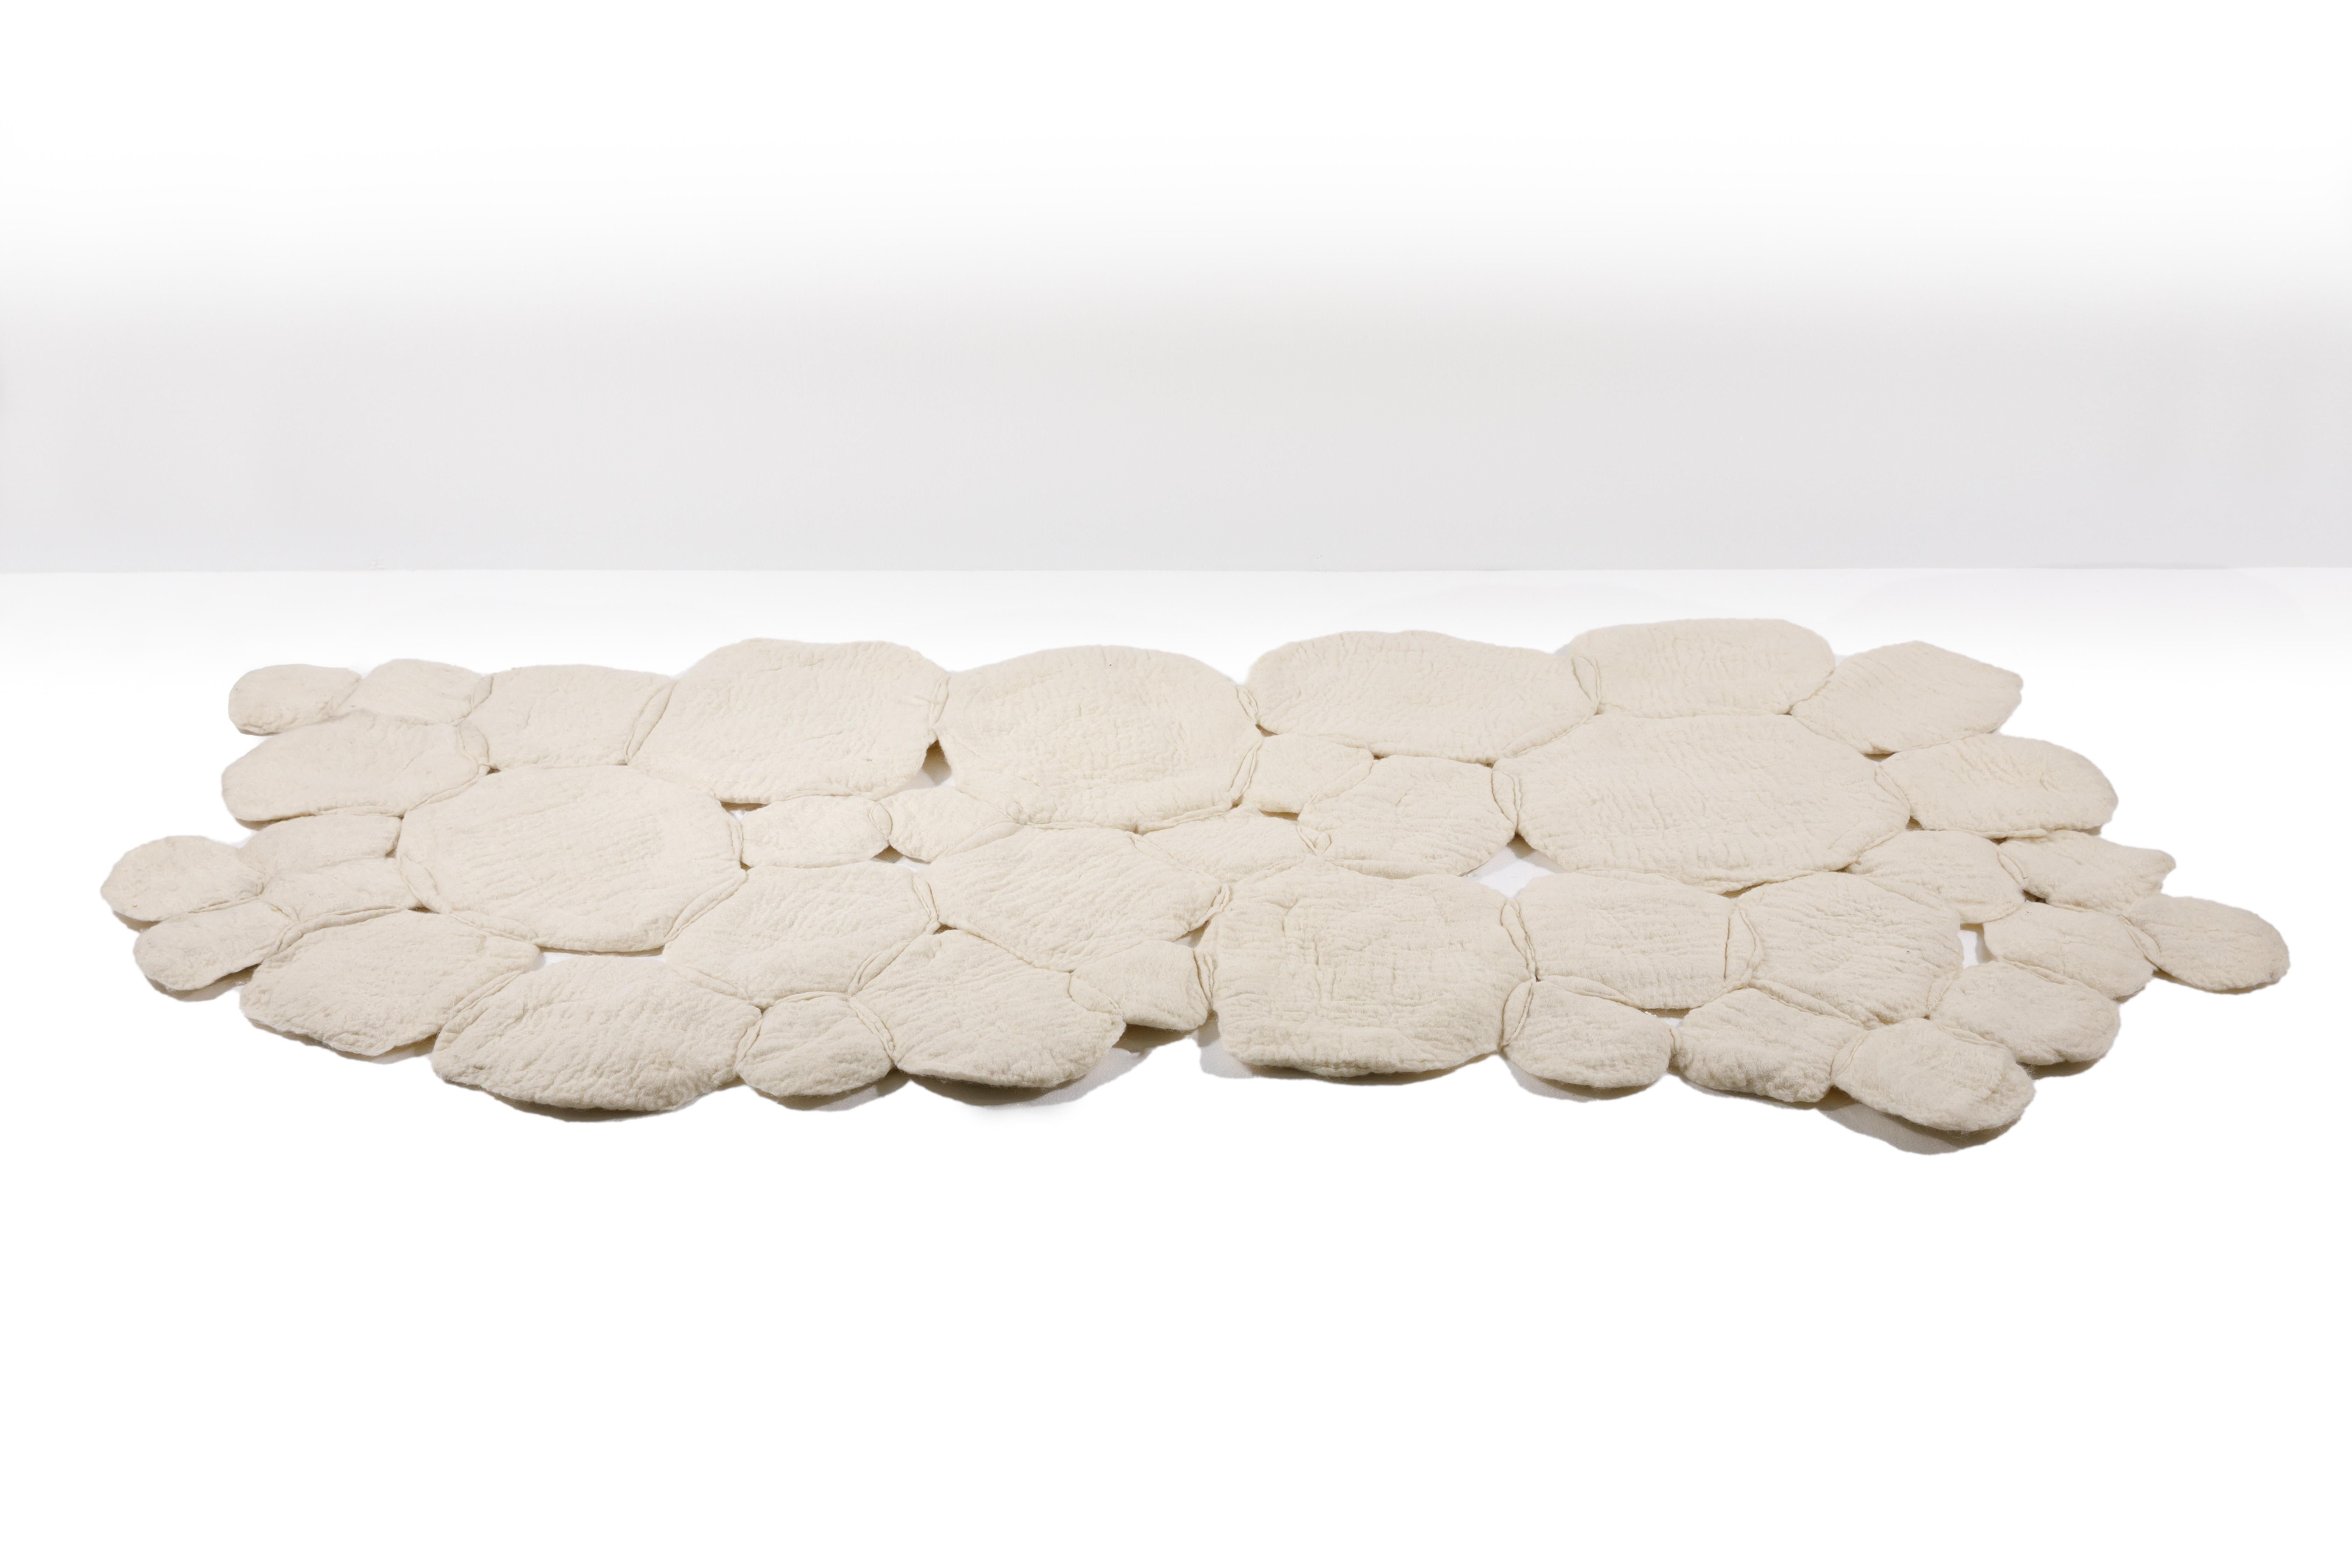 Brazilian Contemporary “Nevoeiro” Felted Wool Blanket or Rug by Inês Schertel, Brazil 2019